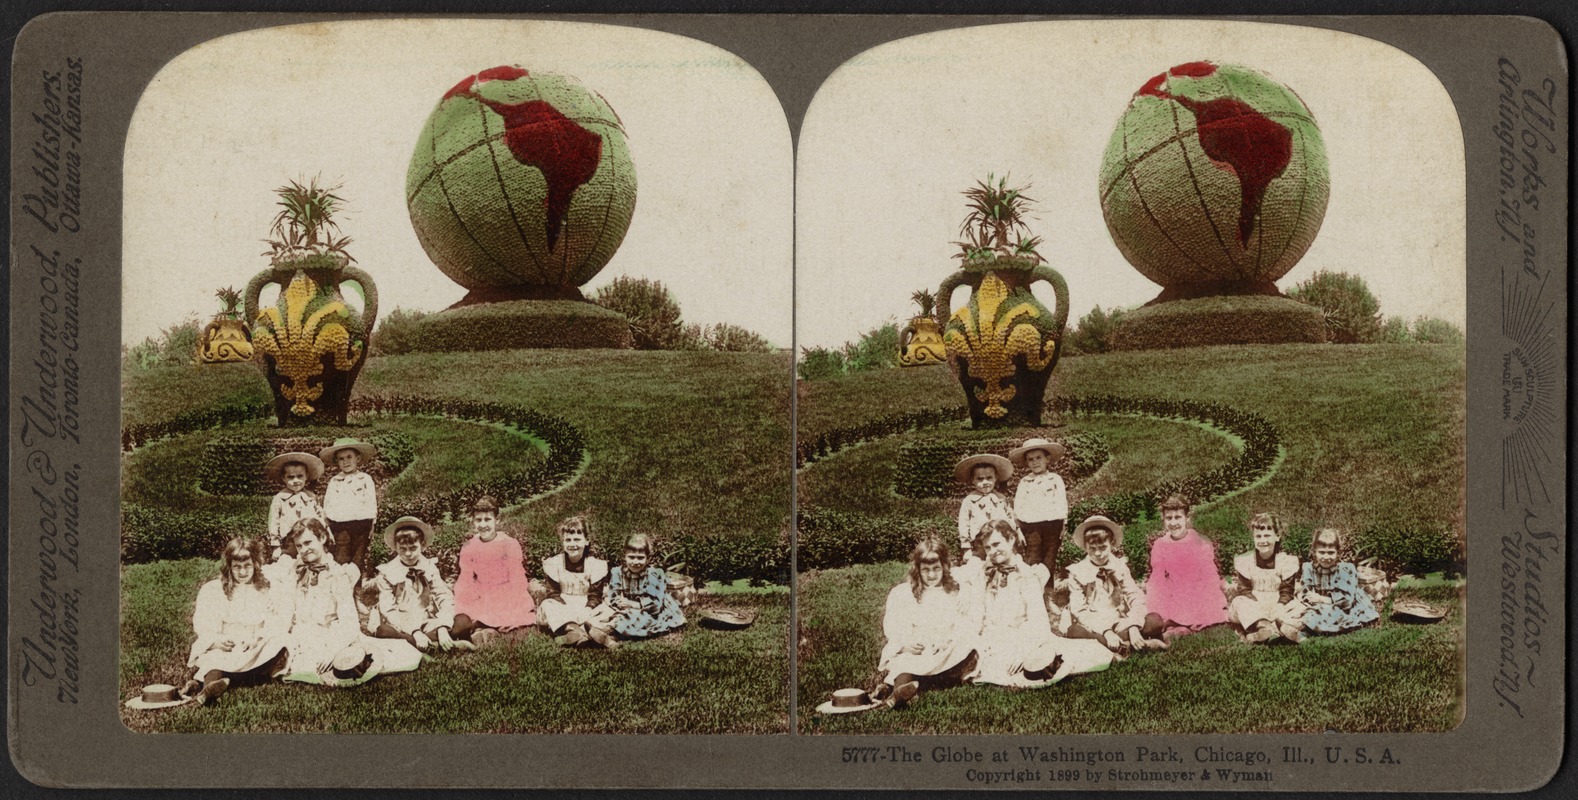 The globe at Washington Park, Chicago, U.S.A.